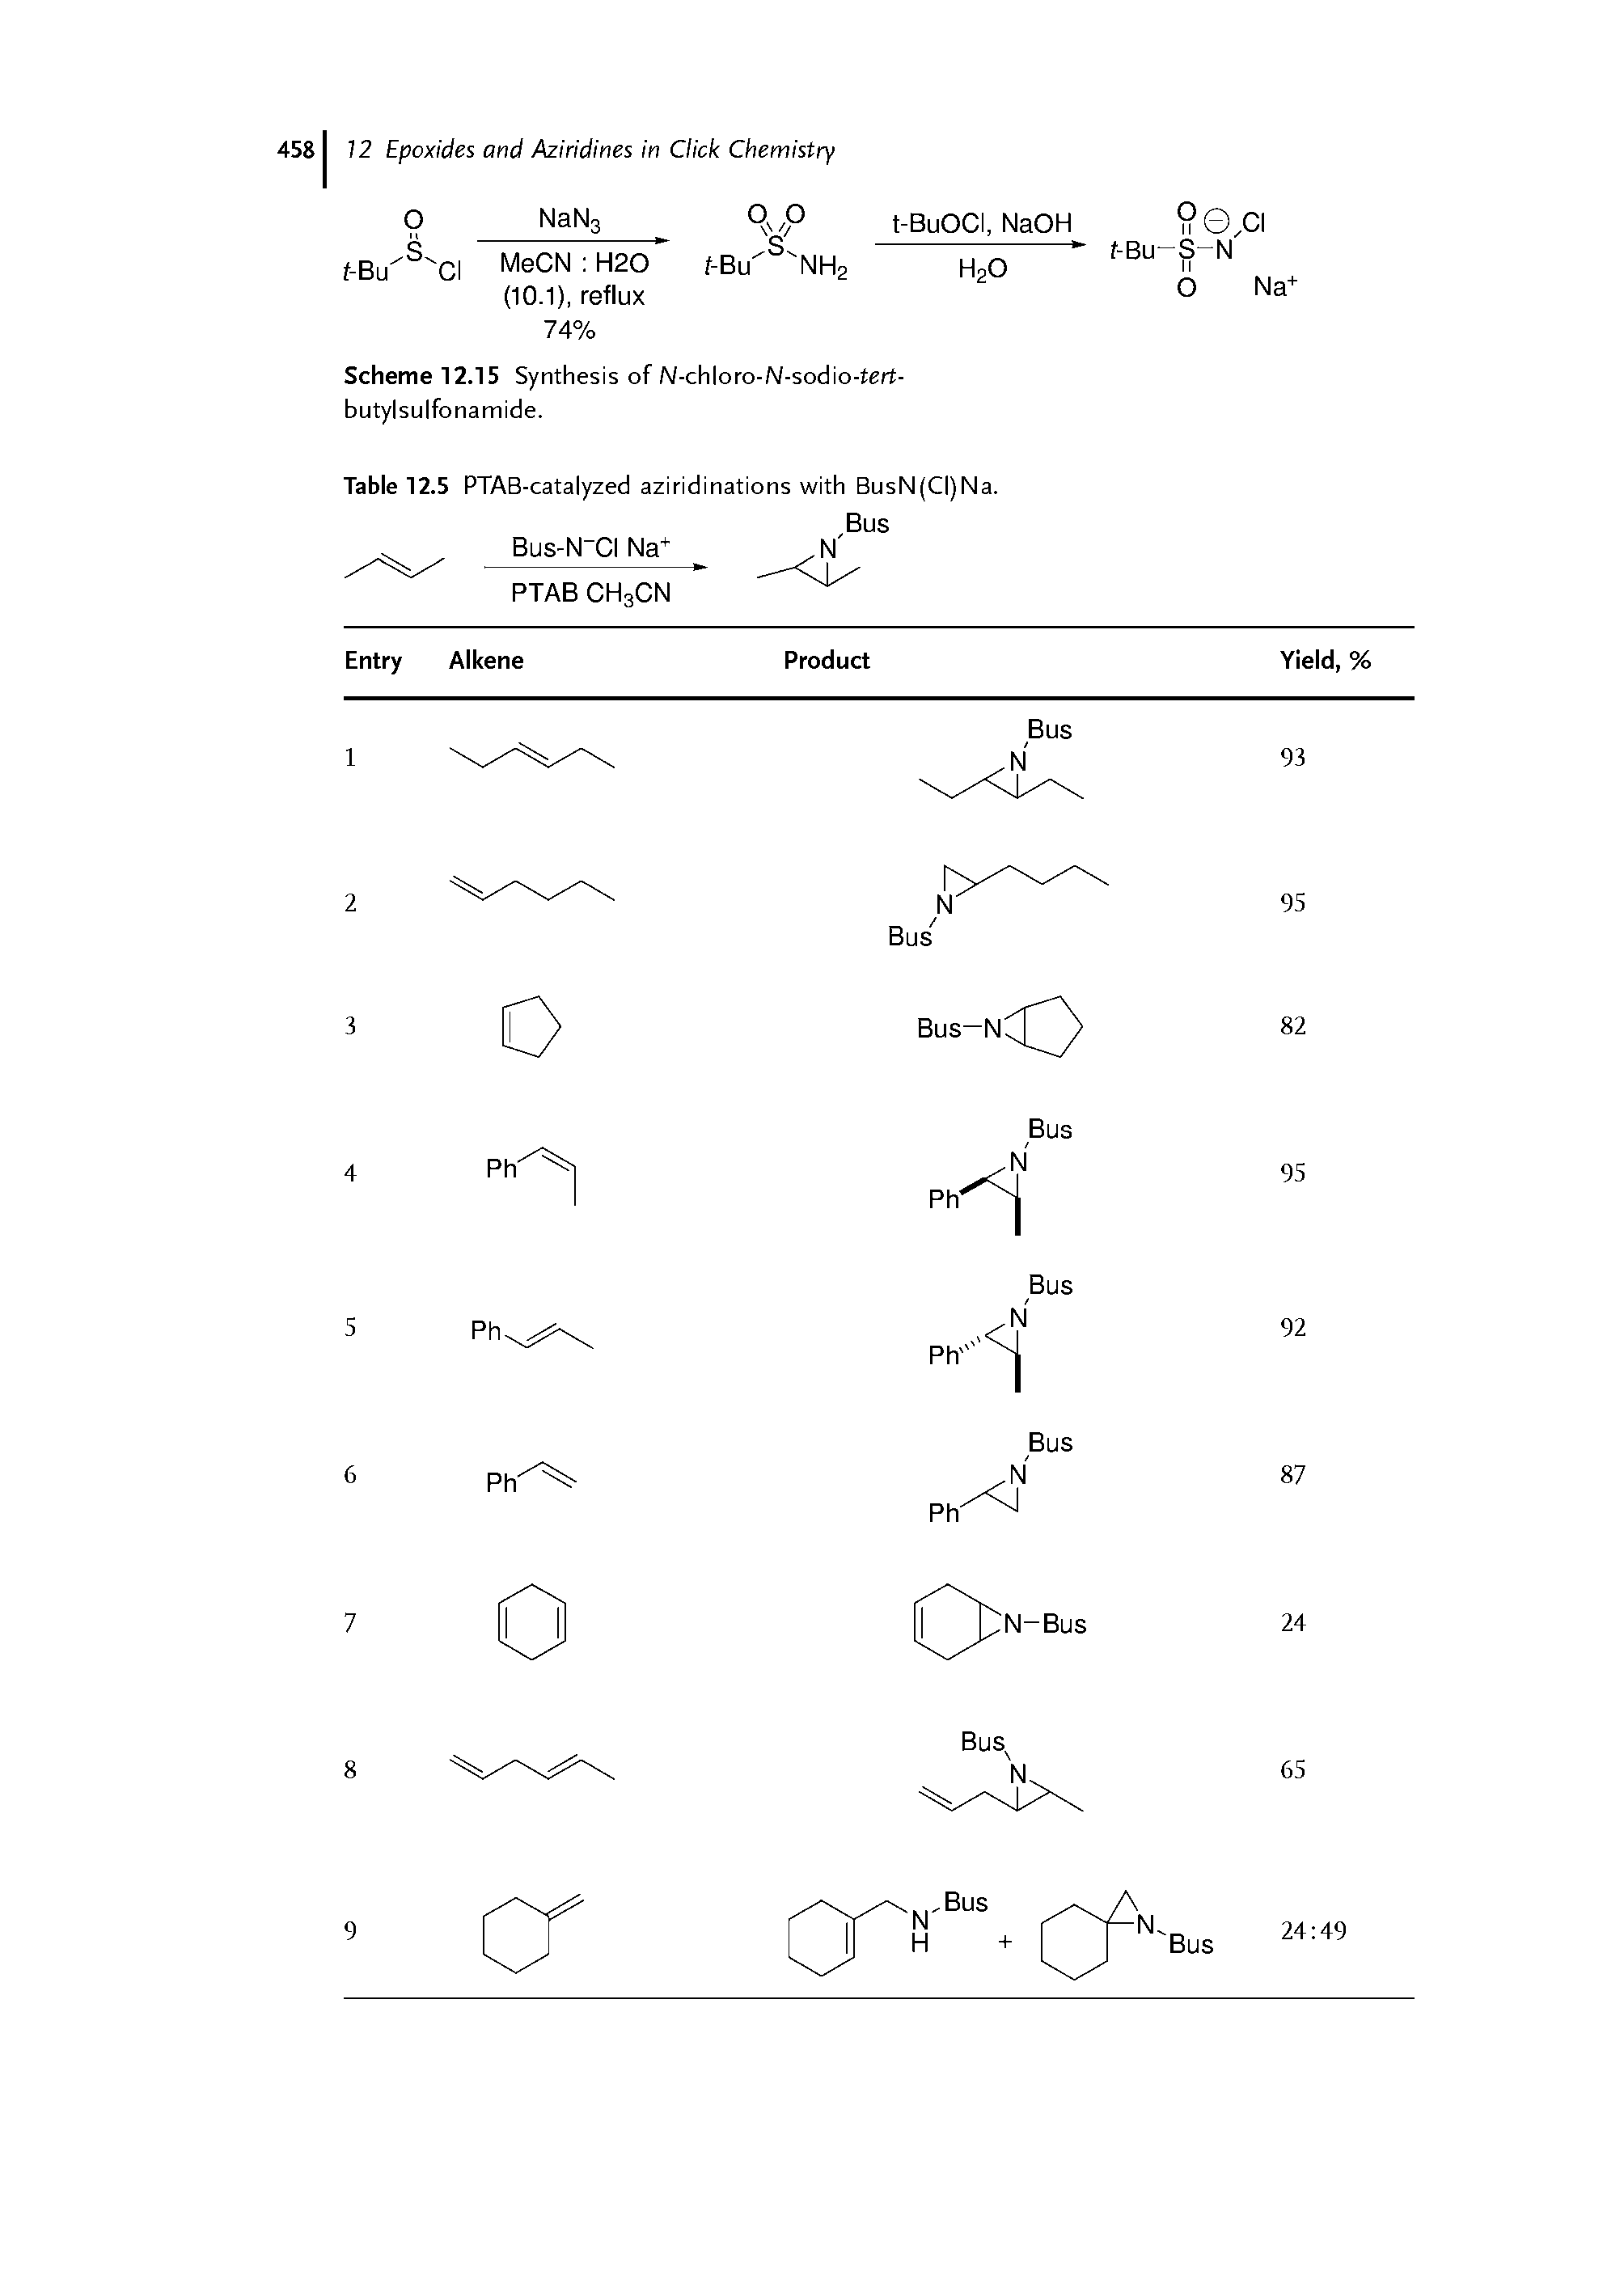 Table 12.5 PTAB-catalyzed aziridinations with BusN(CI)Na.